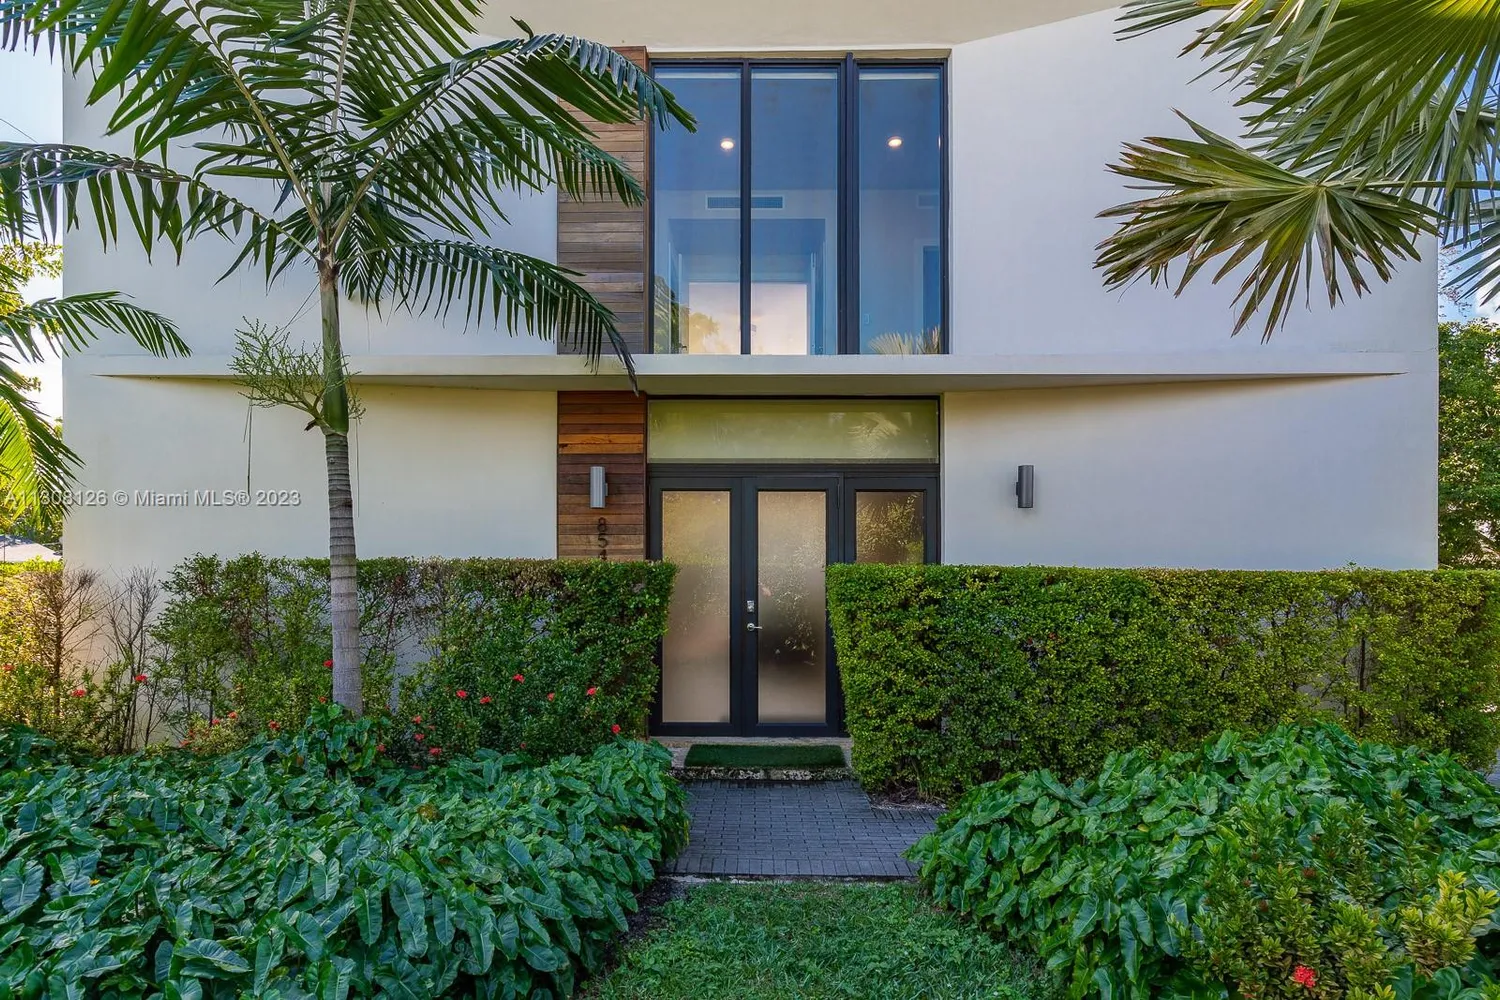 8540 Arboretum Lane modern home in Miami, FL